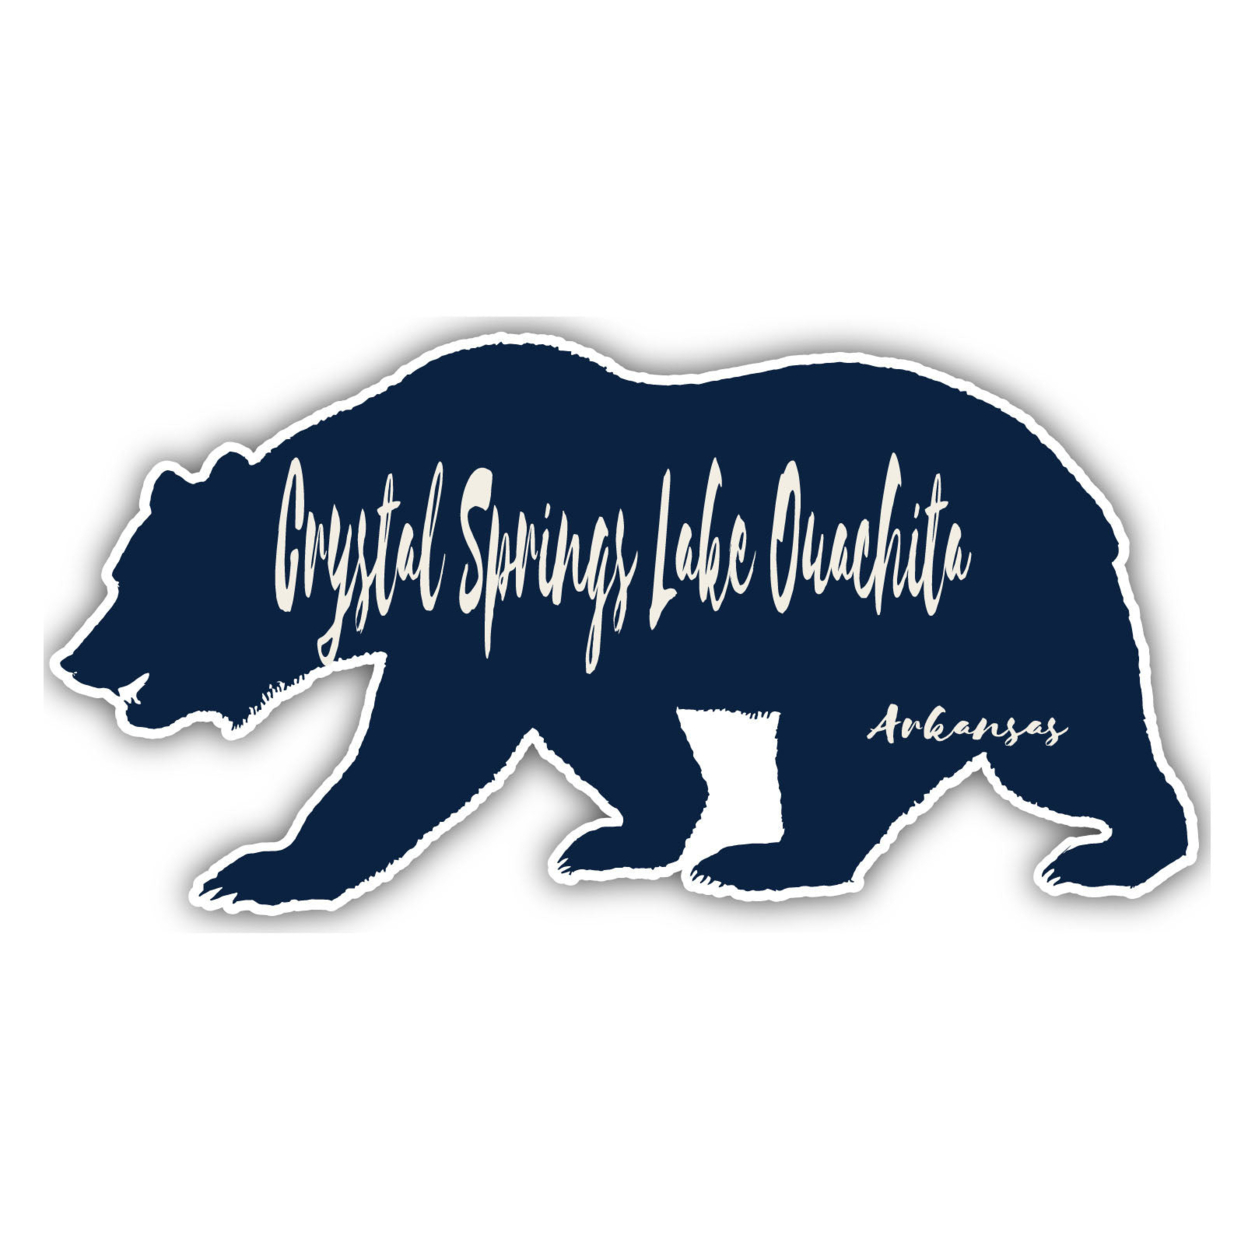 Crystal Springs Lake Ouachita Arkansas Souvenir Decorative Stickers (Choose Theme And Size) - Single Unit, 2-Inch, Tent